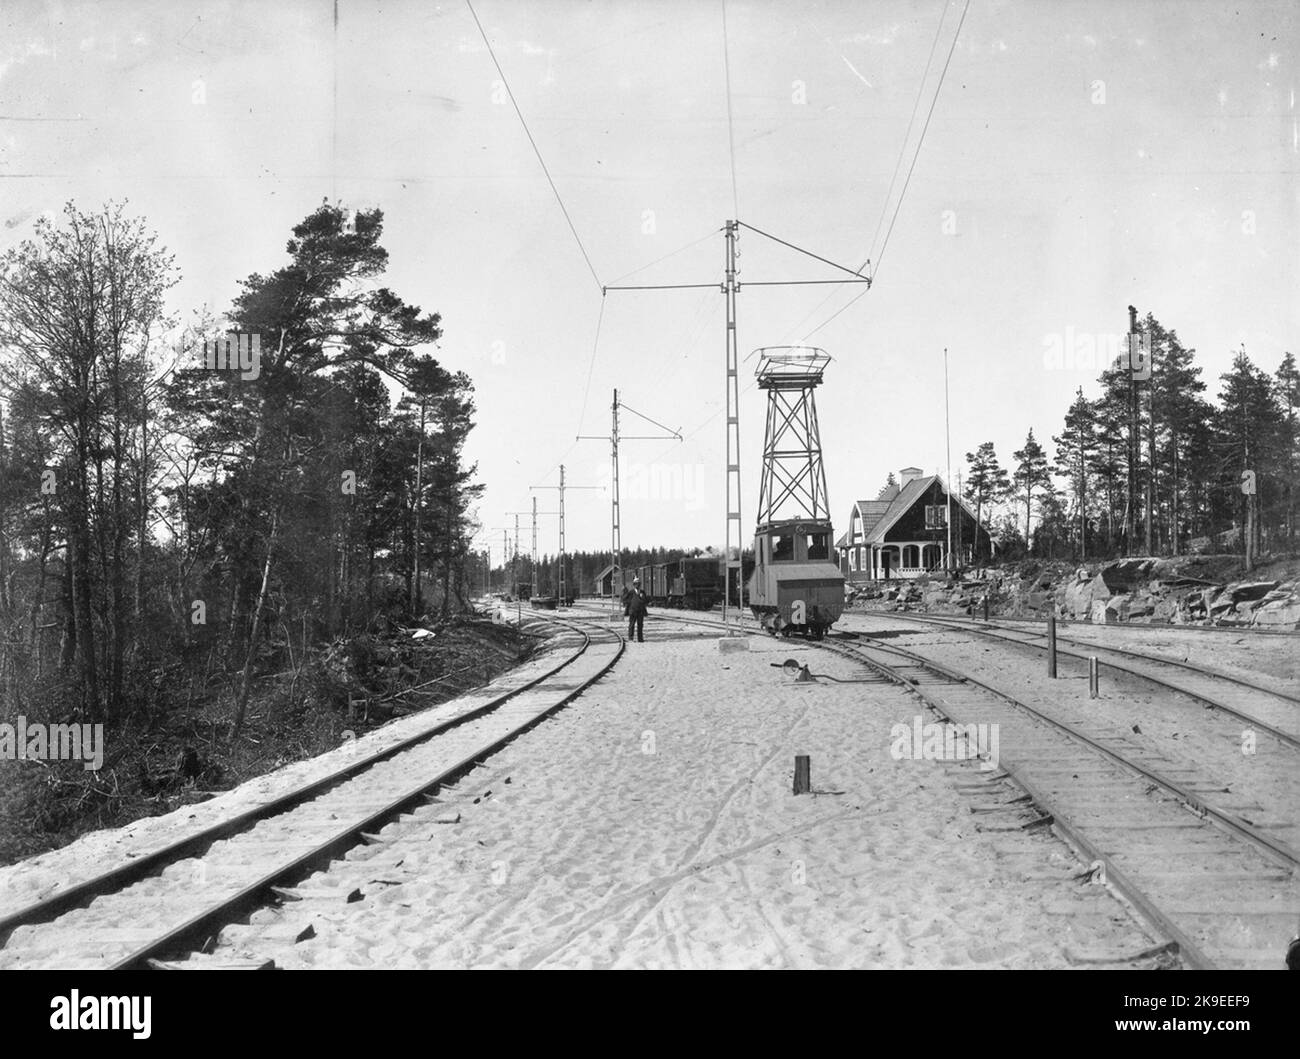 Skoghall Sawmill Elllok 7. Nordmark-Klarälven's railway, Nklij passenger trains in the background. Stock Photo